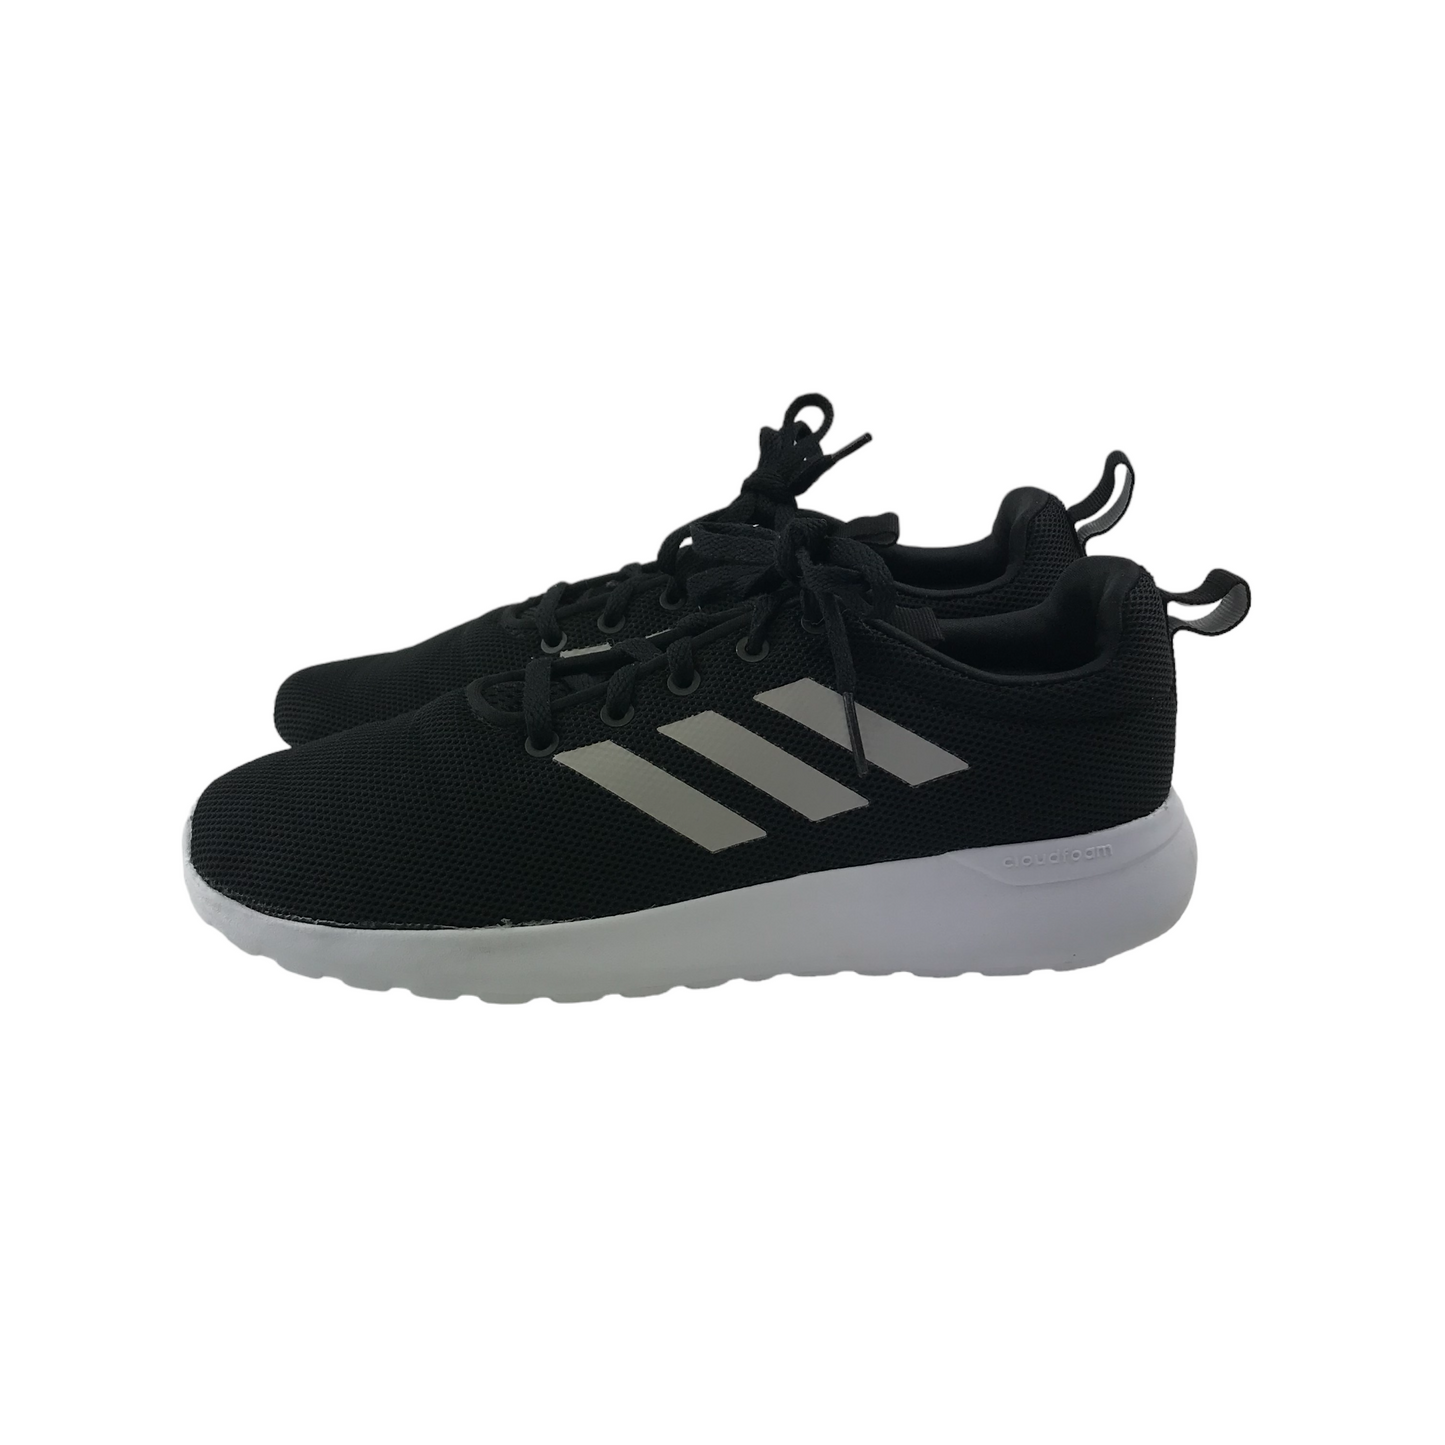 Adidas Trainer Shoe Size 5.5 Black Classic